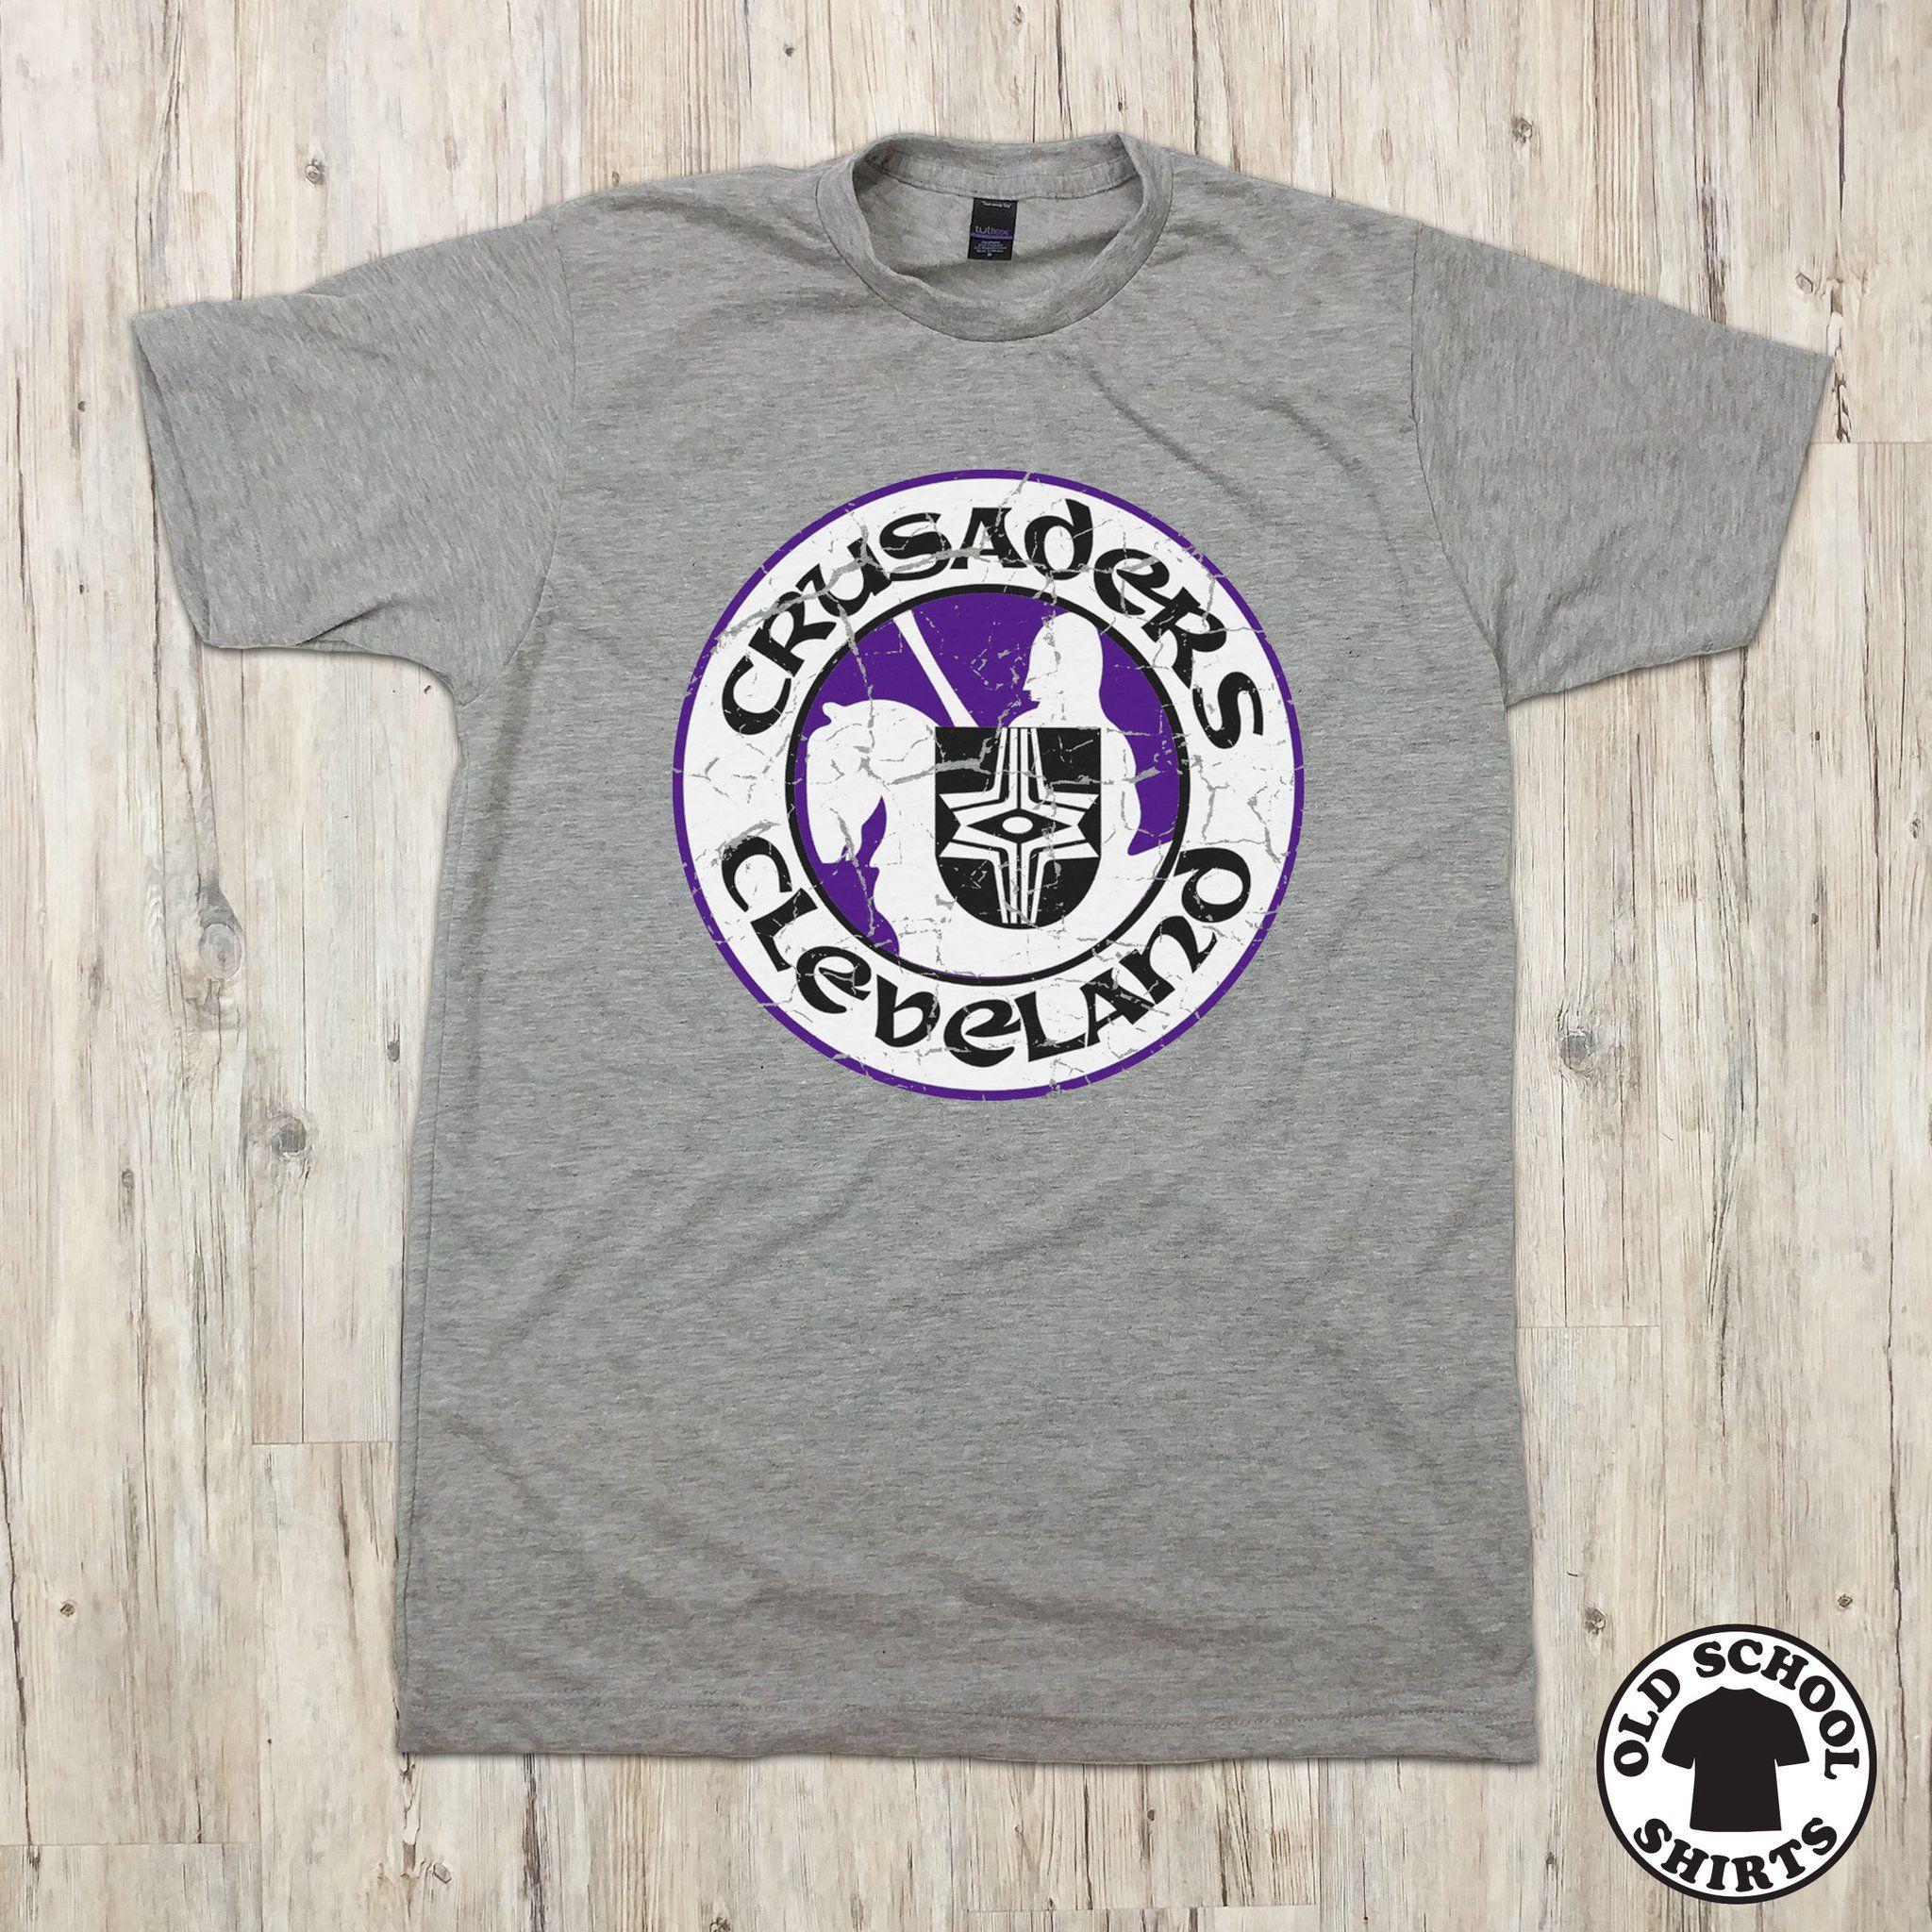 Cleveland Crusaders Logo - Cleveland Crusaders. Old School Shirts